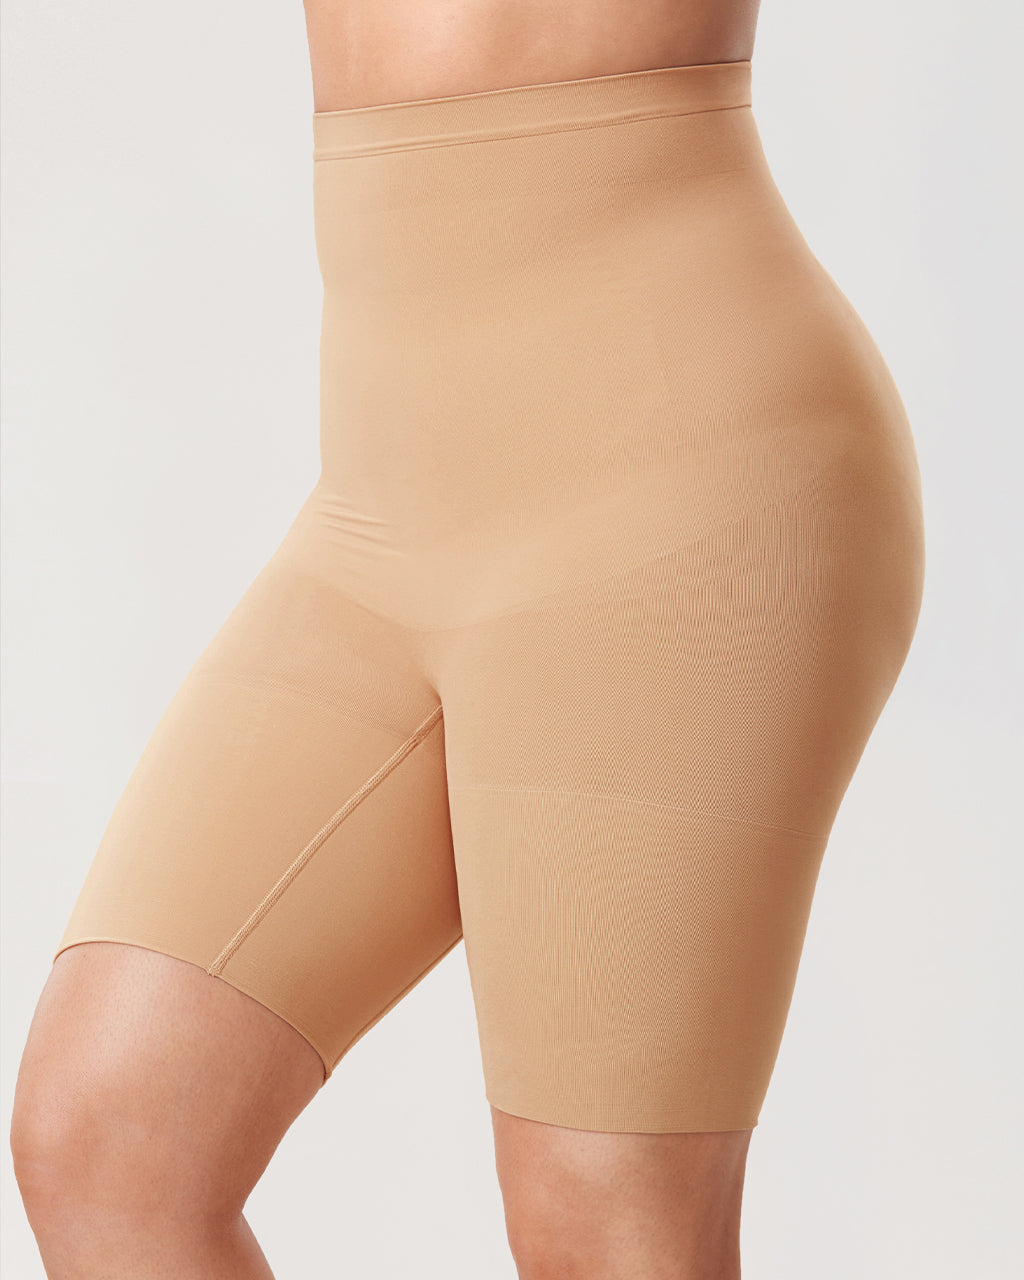 Buy DELIMIRA Women's Tummy Control Shapewear Smooth Body Shaping